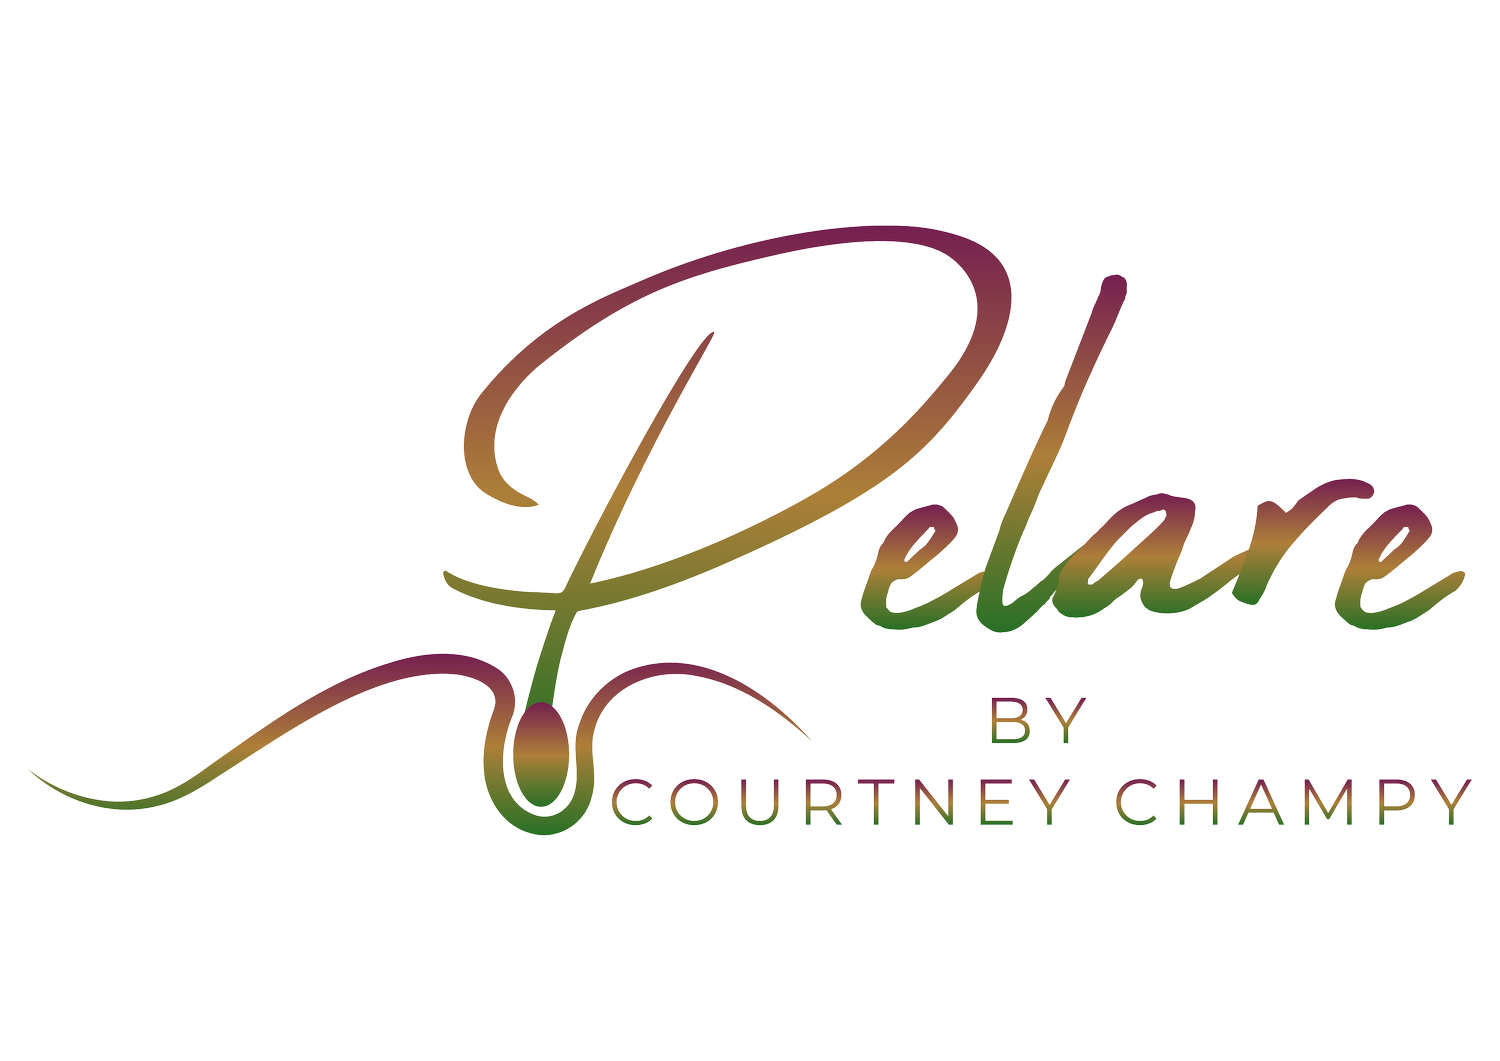 Pelare by Courtney Champy